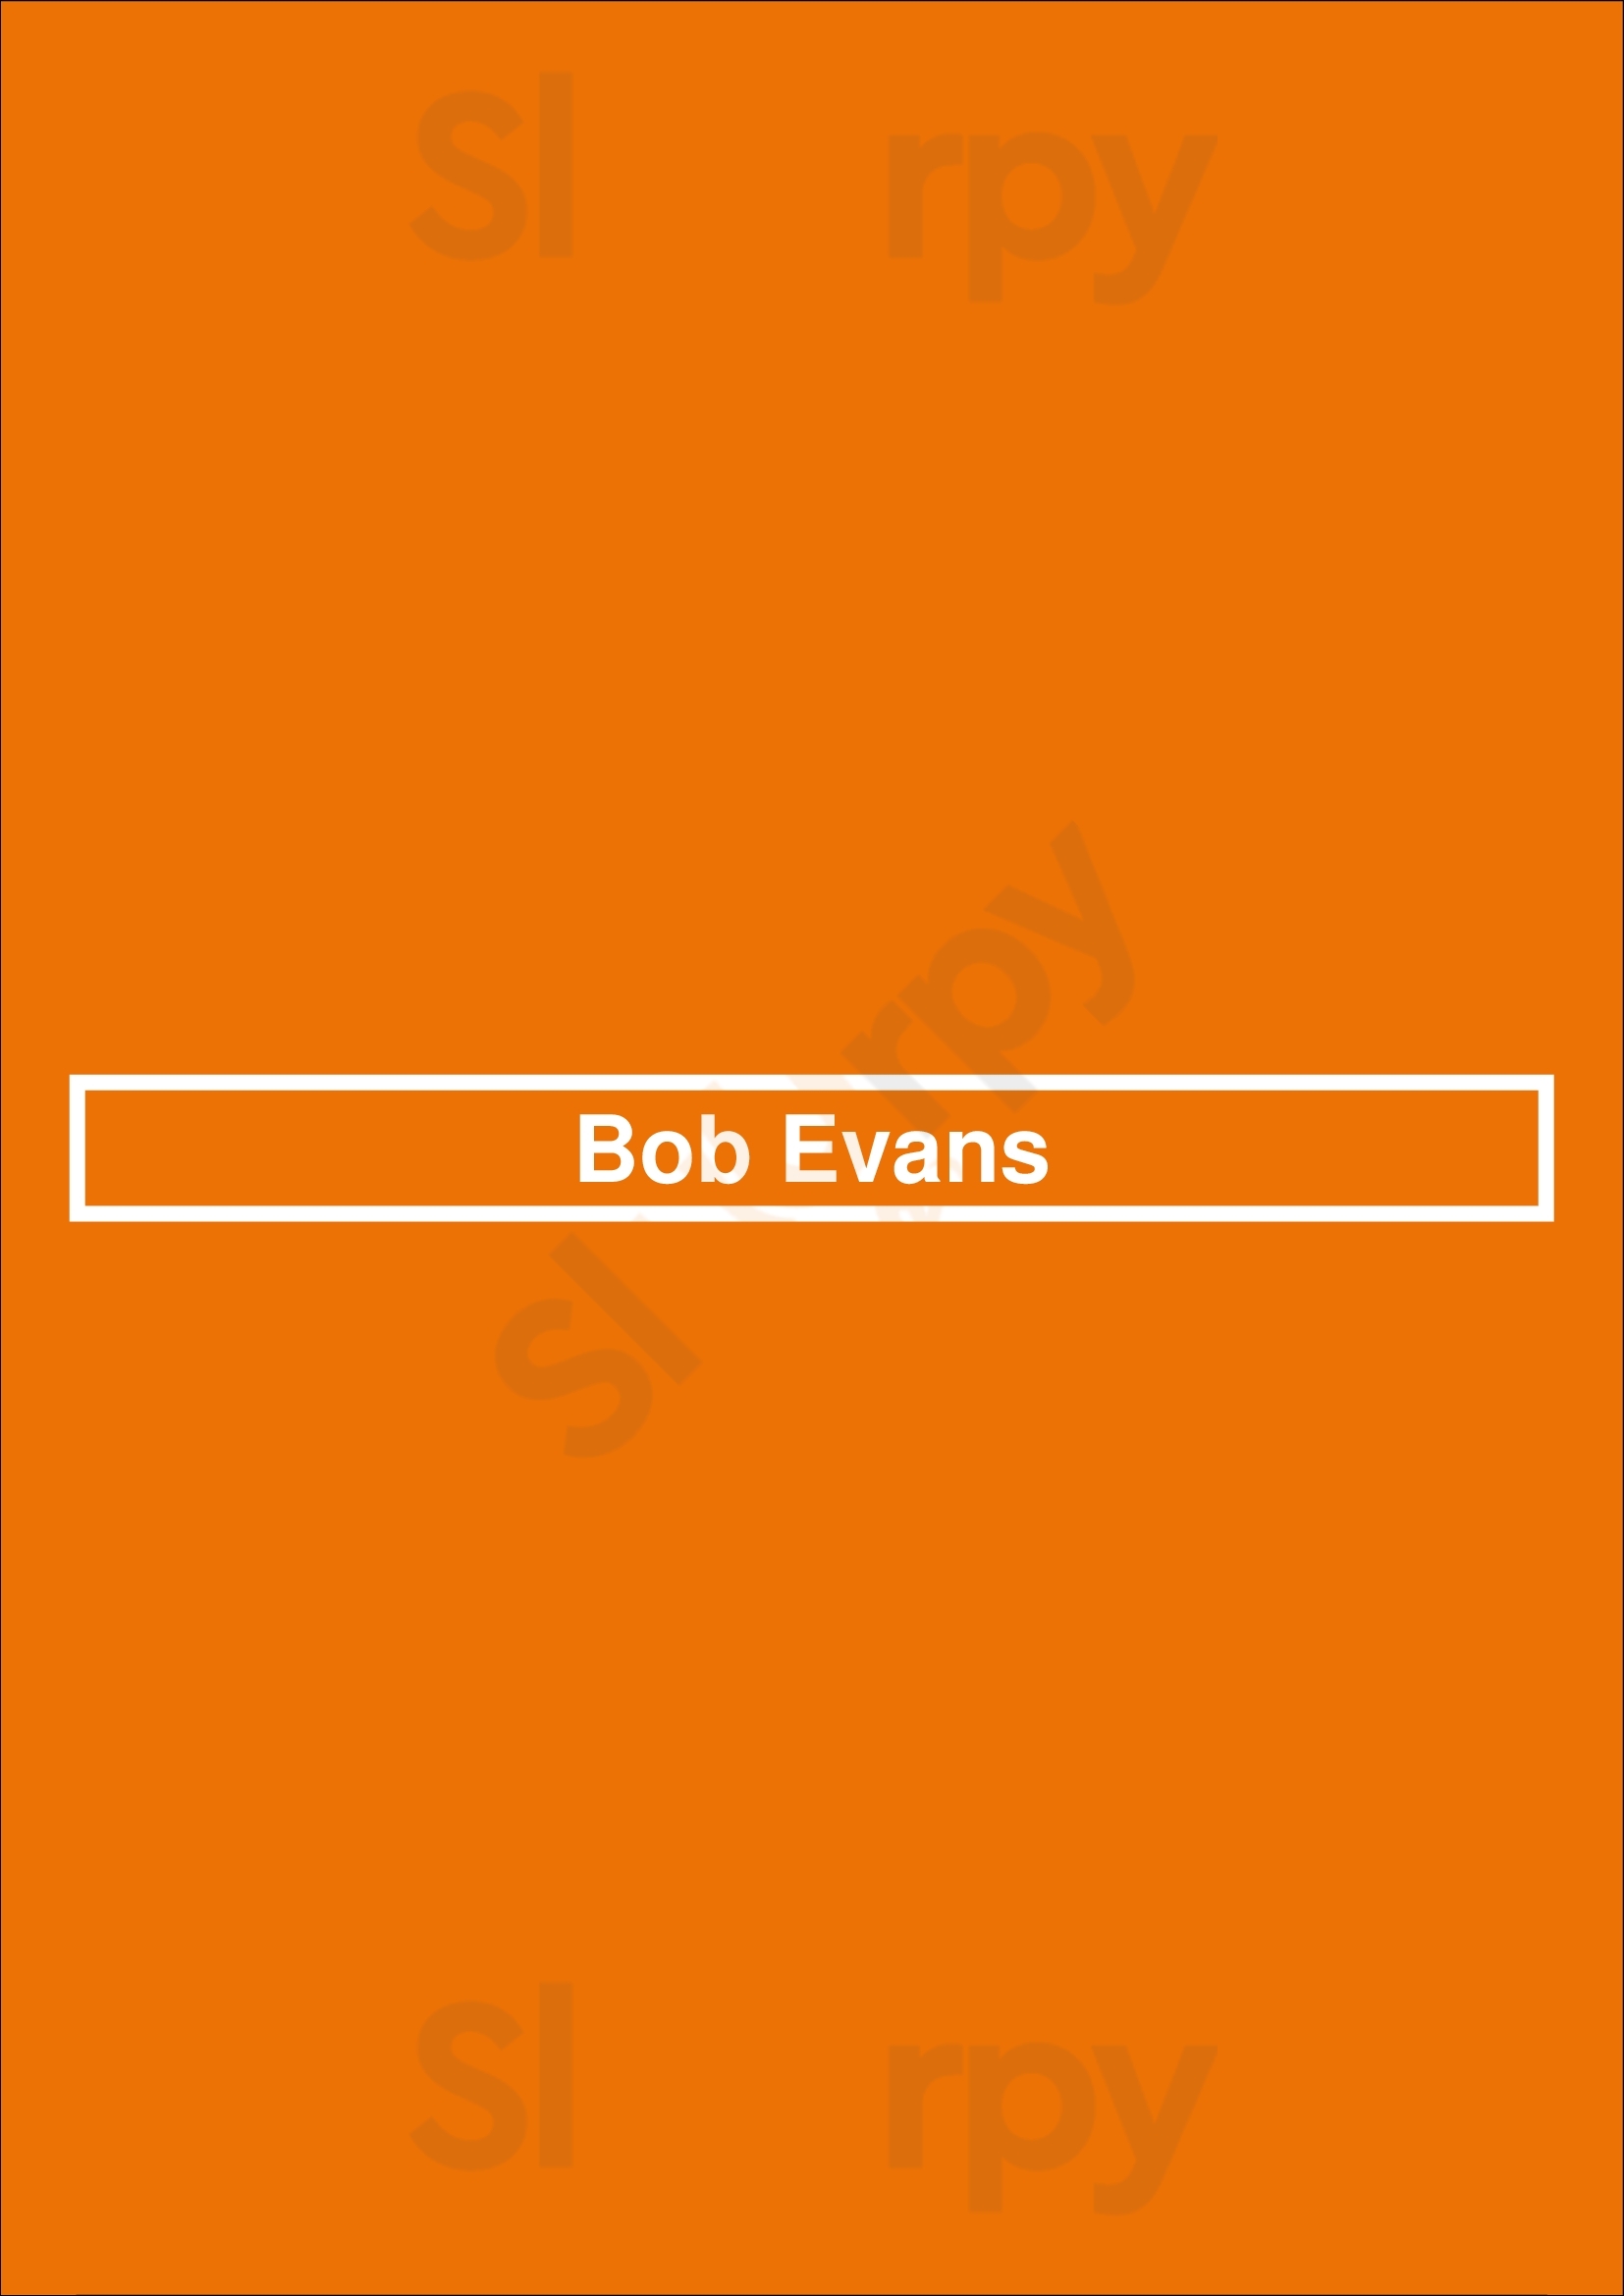 Bob Evans Raleigh Menu - 1